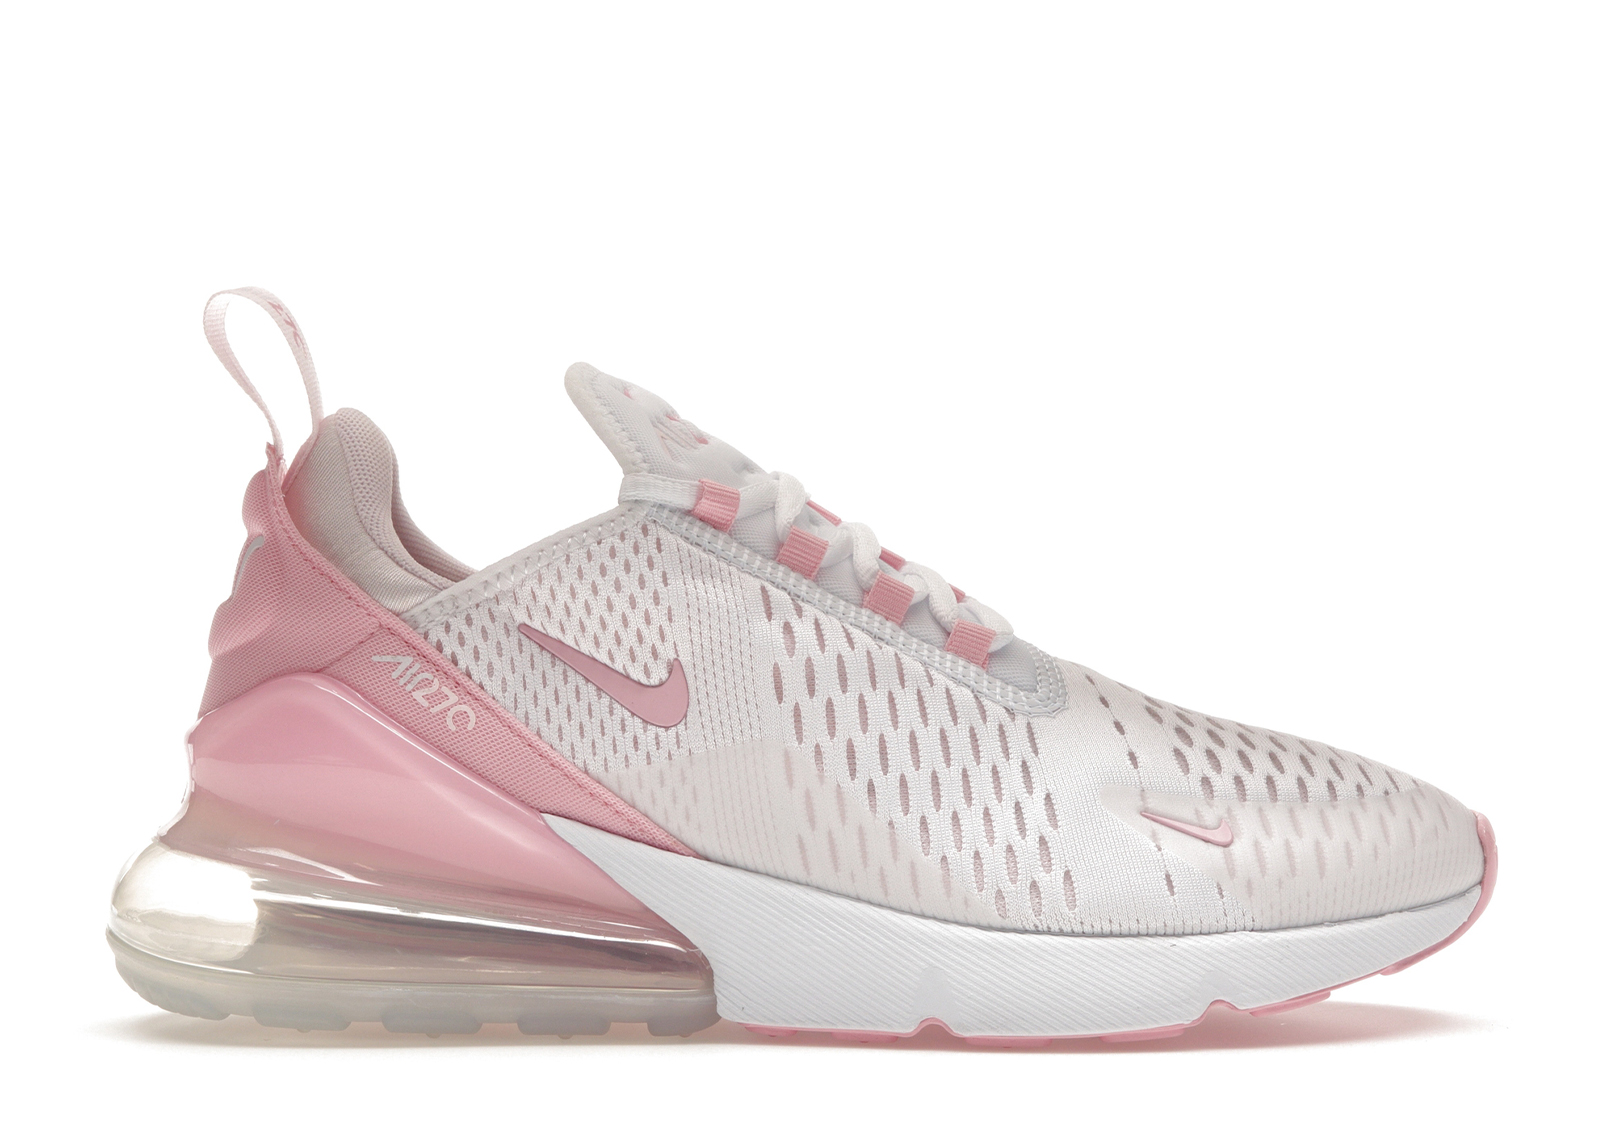 Nike Air Max 270 White Soft Pink (Women's) - FJ4575-100 - US